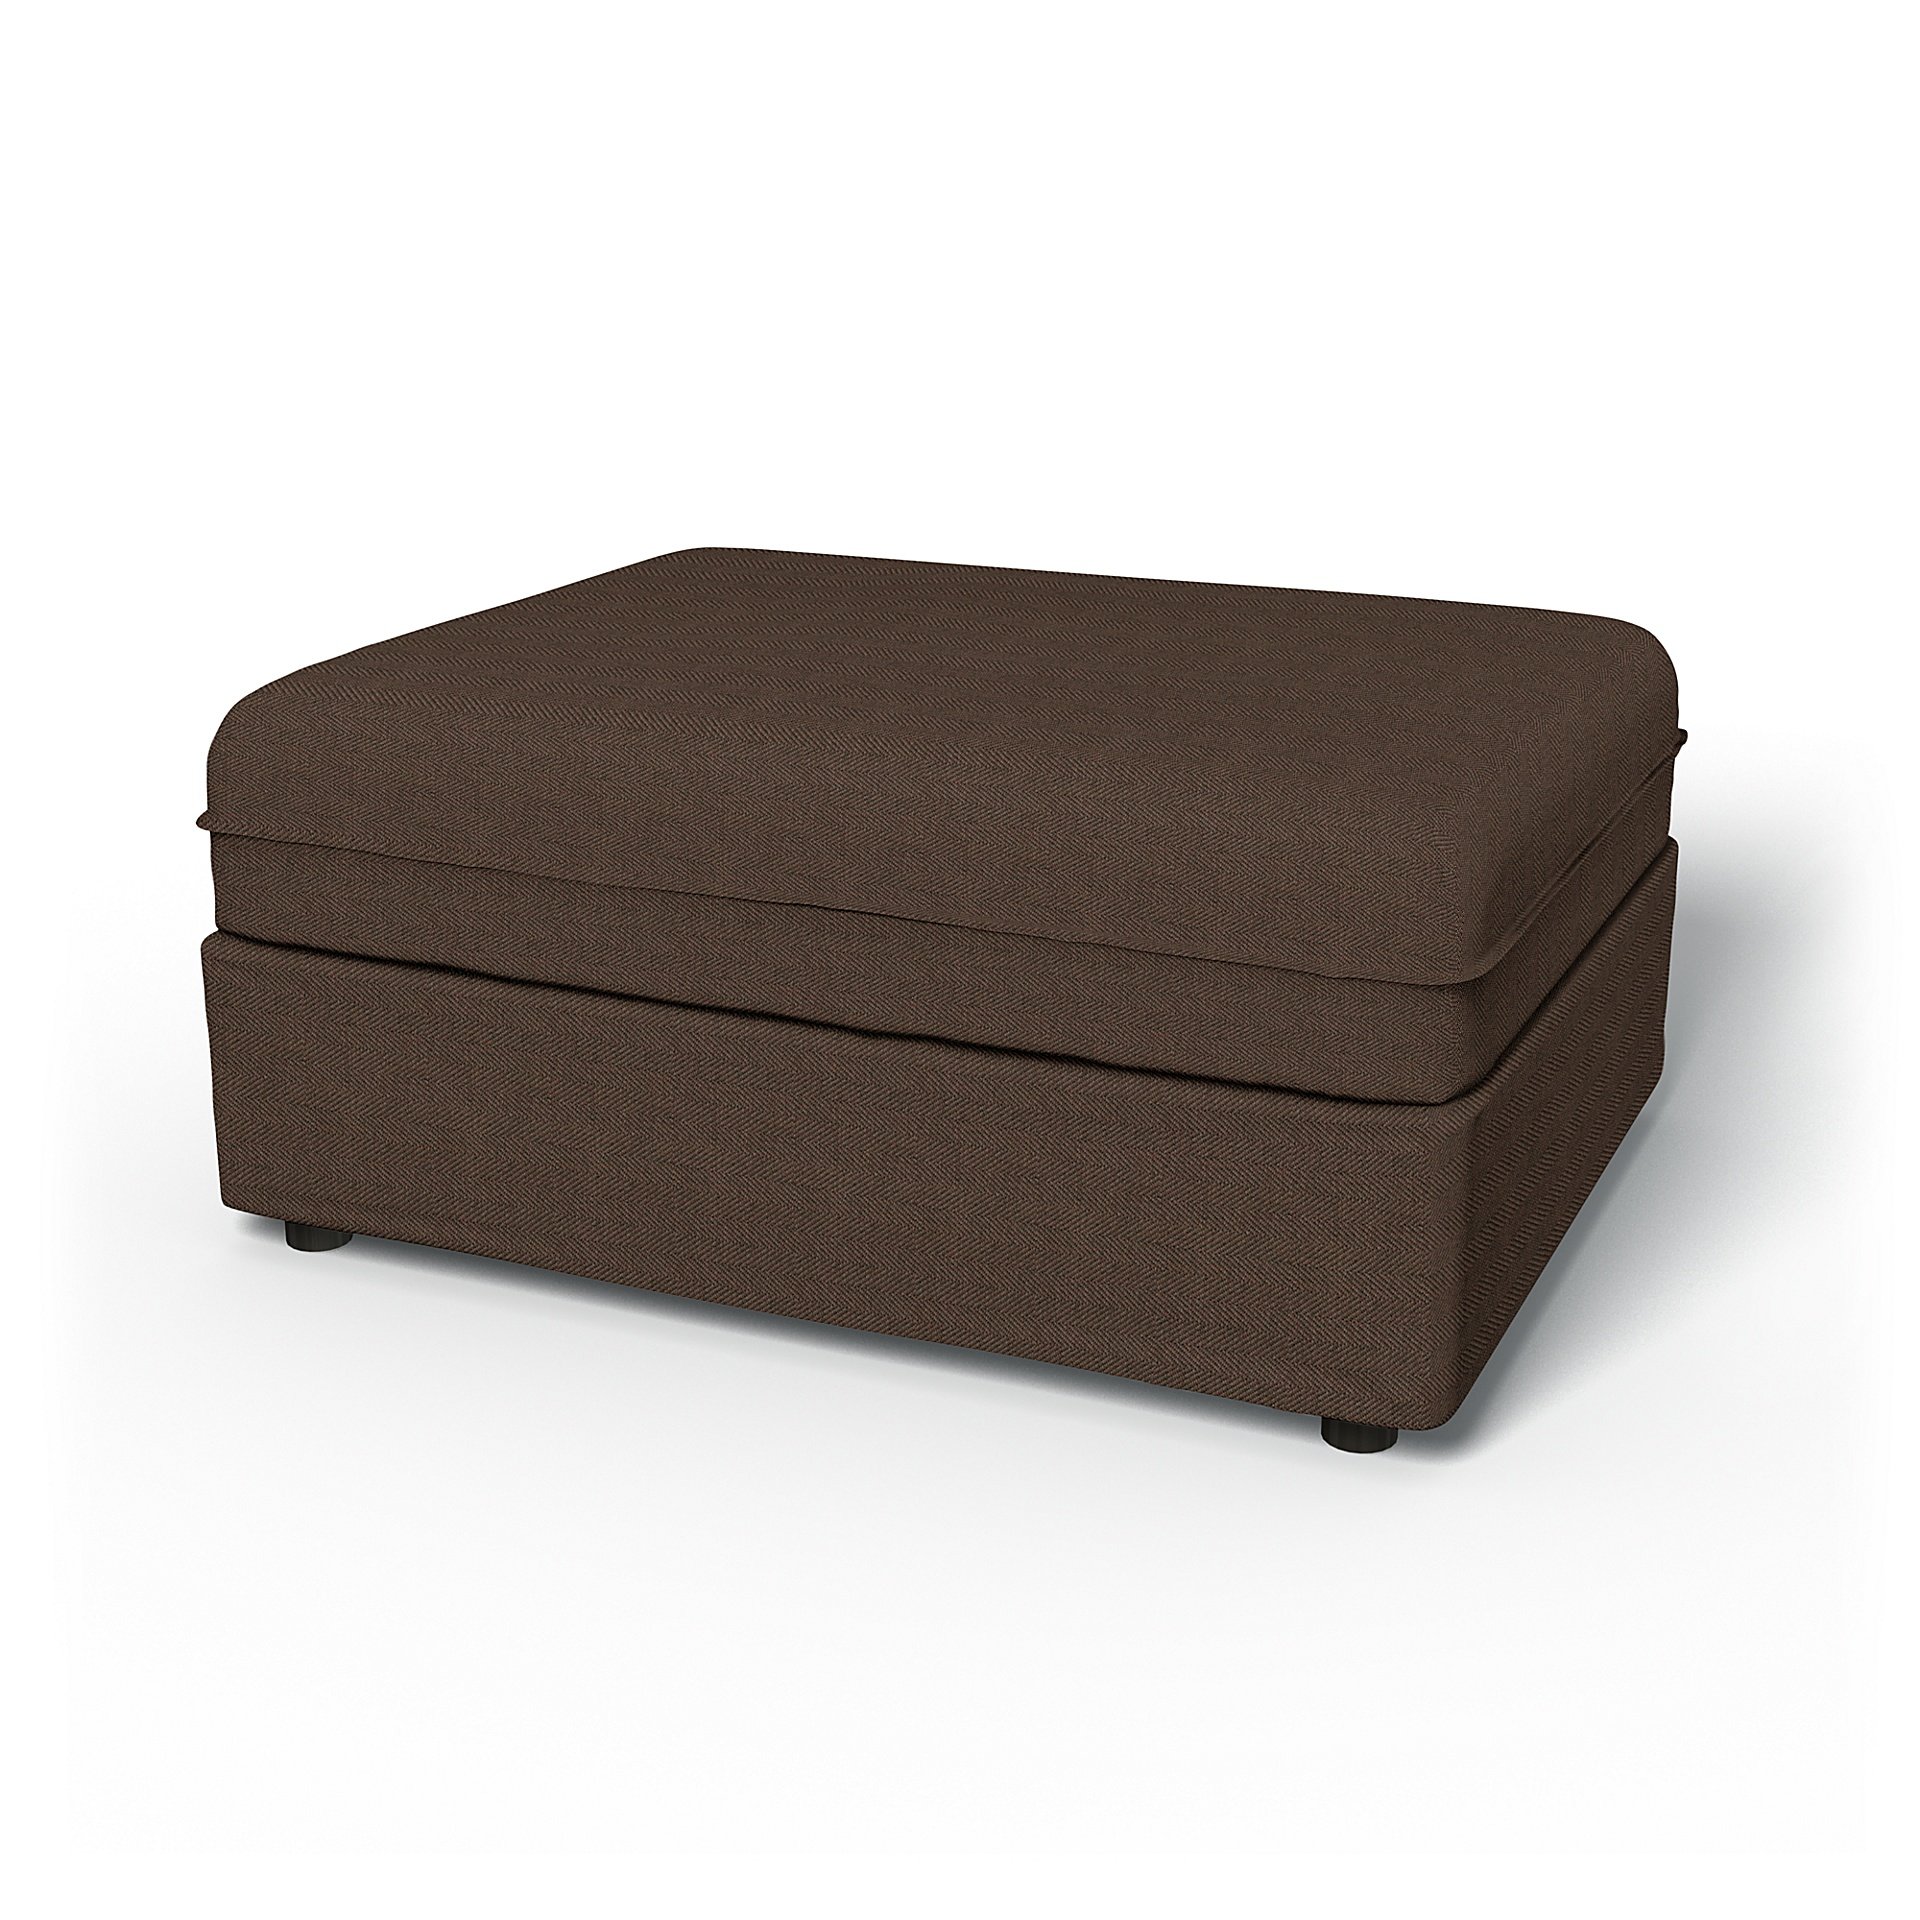 IKEA - Vallentuna Seat Module Cover 100x80cm 39x32in, Chocolate, Boucle & Texture - Bemz